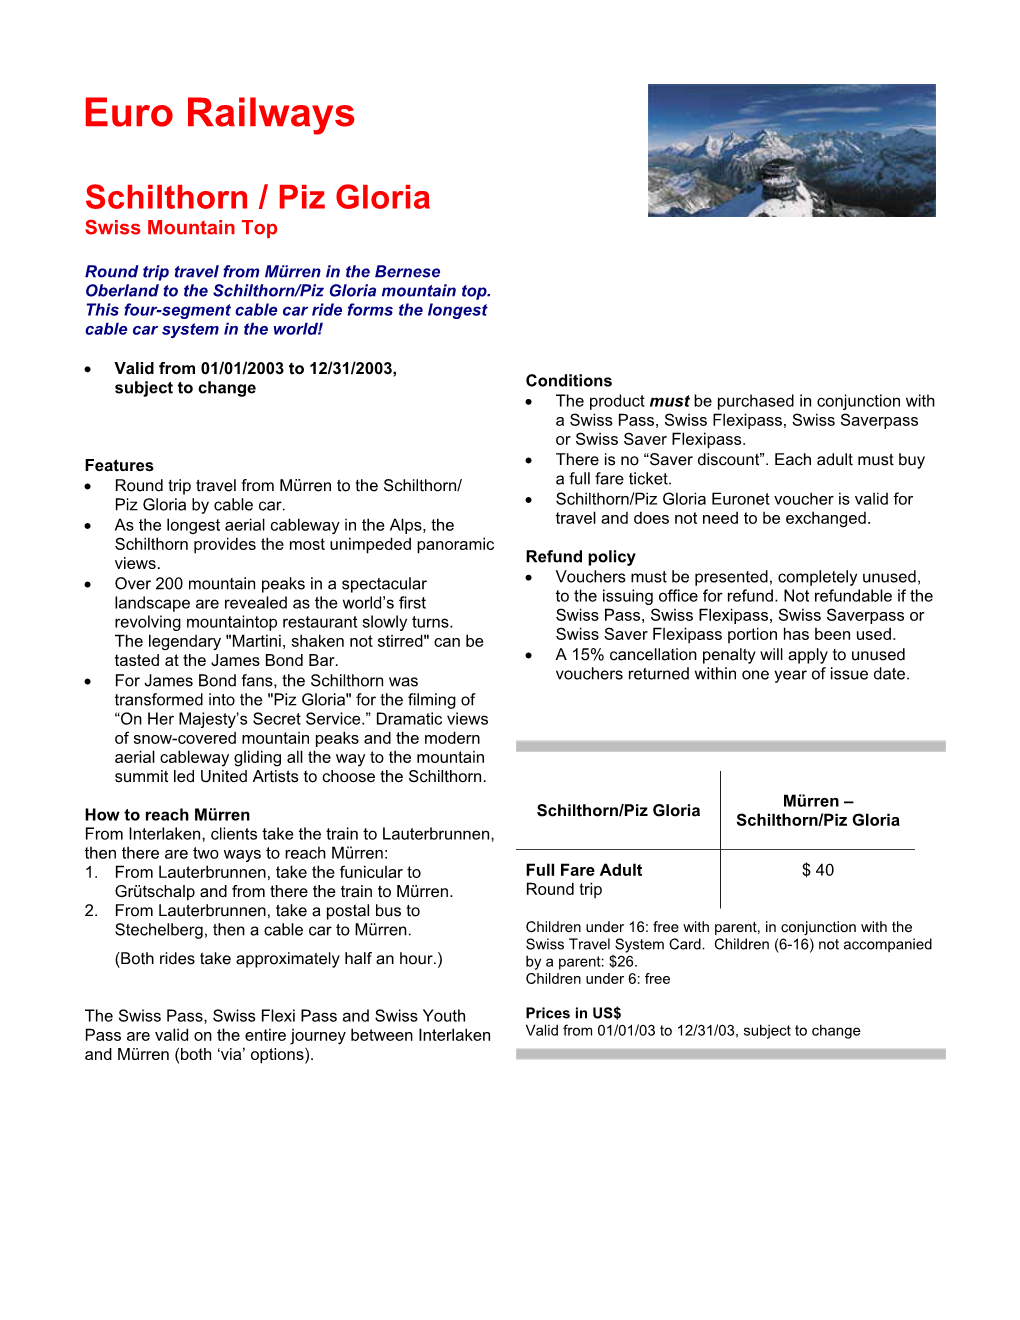 Schilthorn / Piz Gloria Swiss Mountain Top